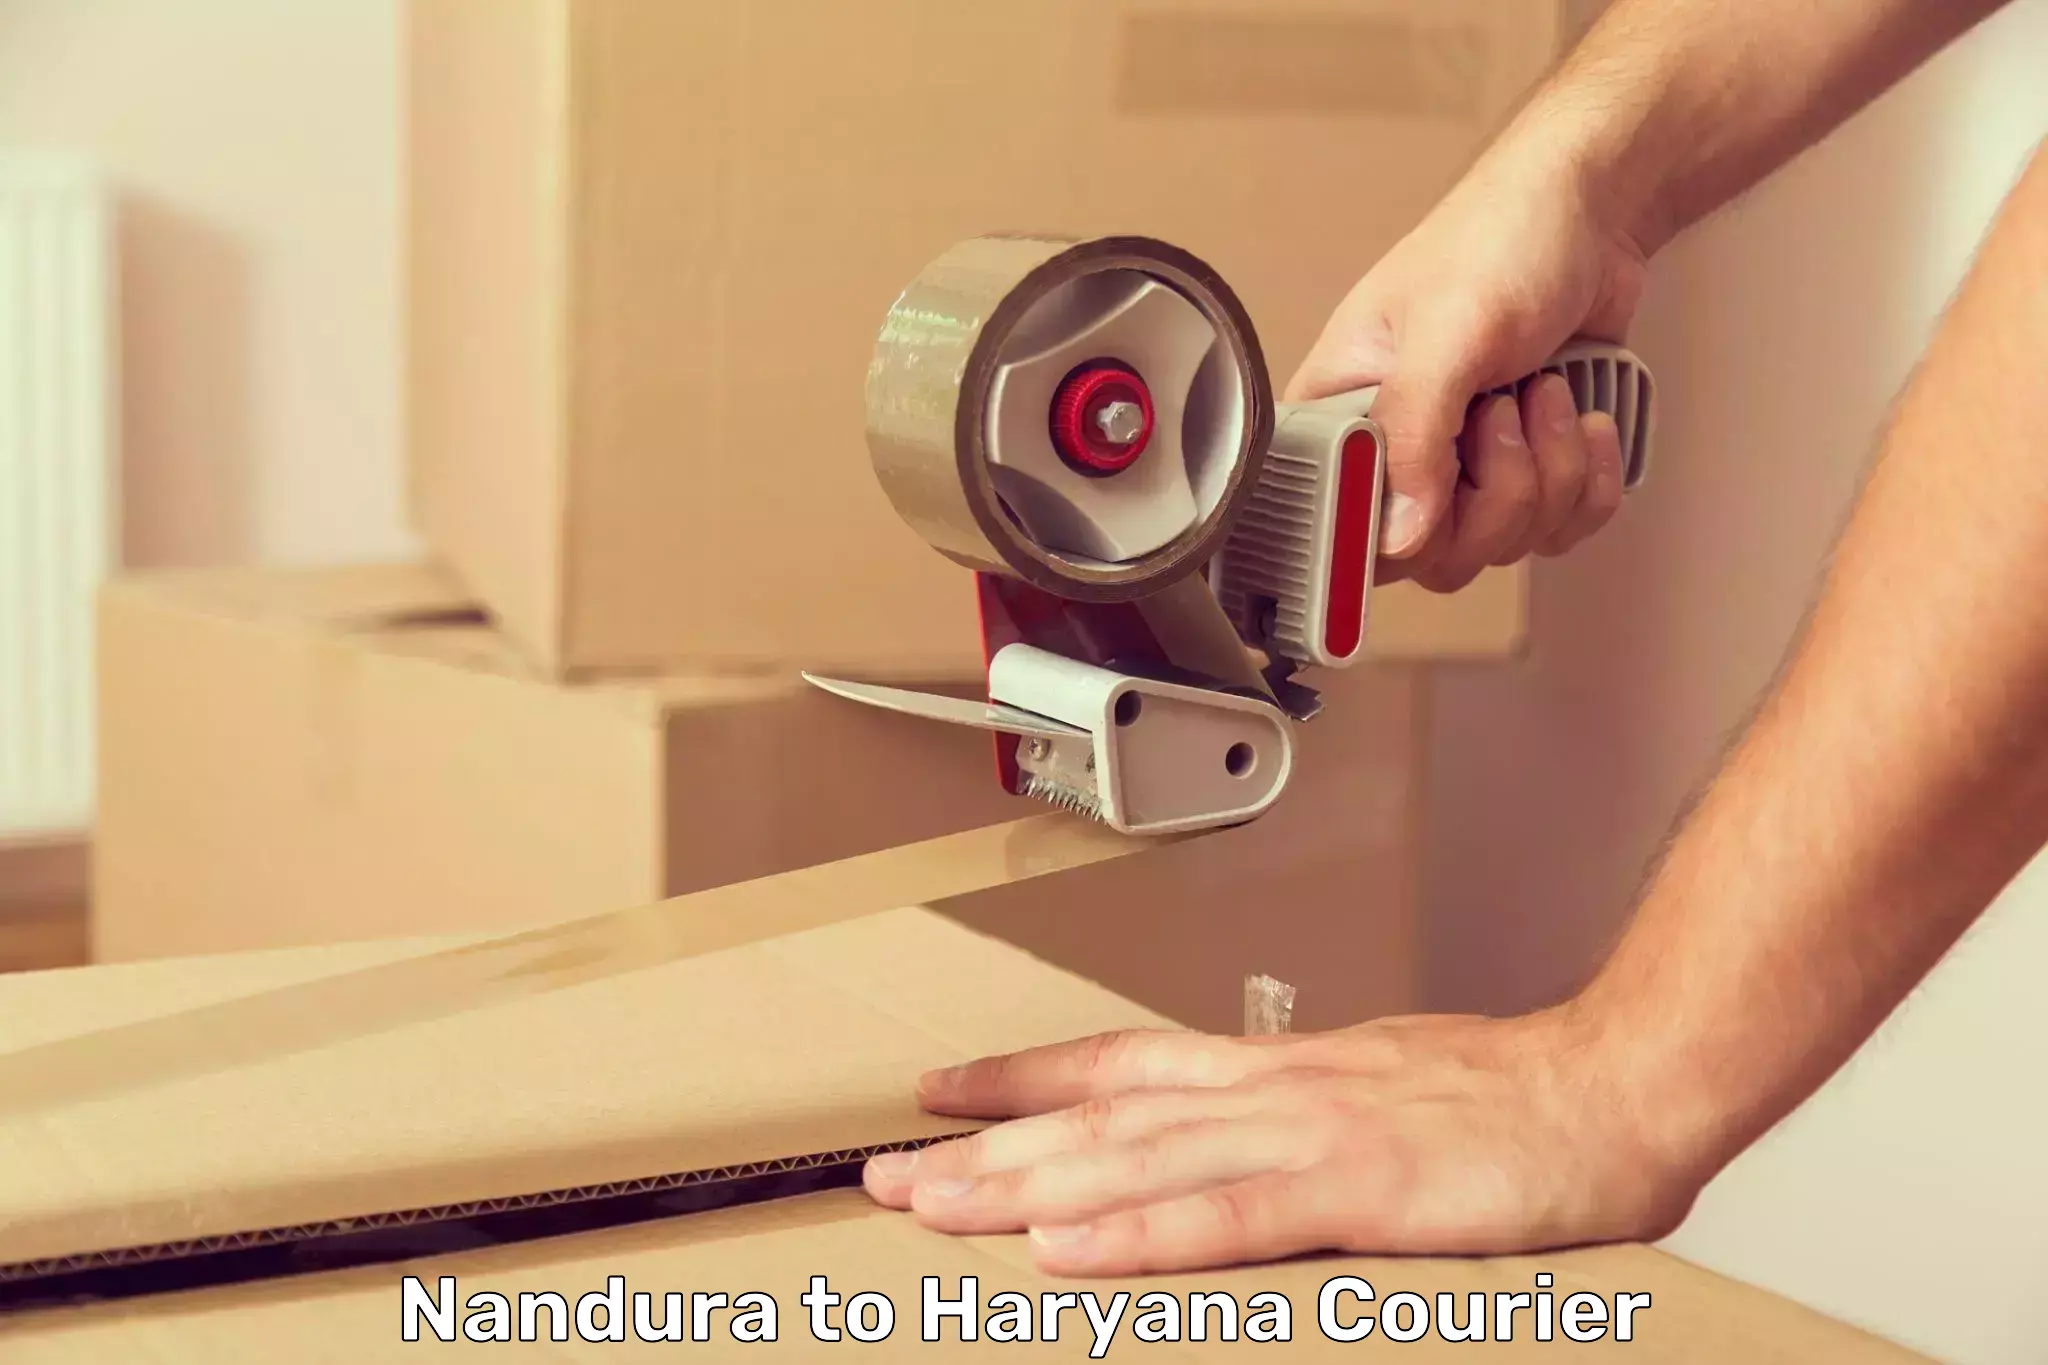 Express logistics service Nandura to NCR Haryana